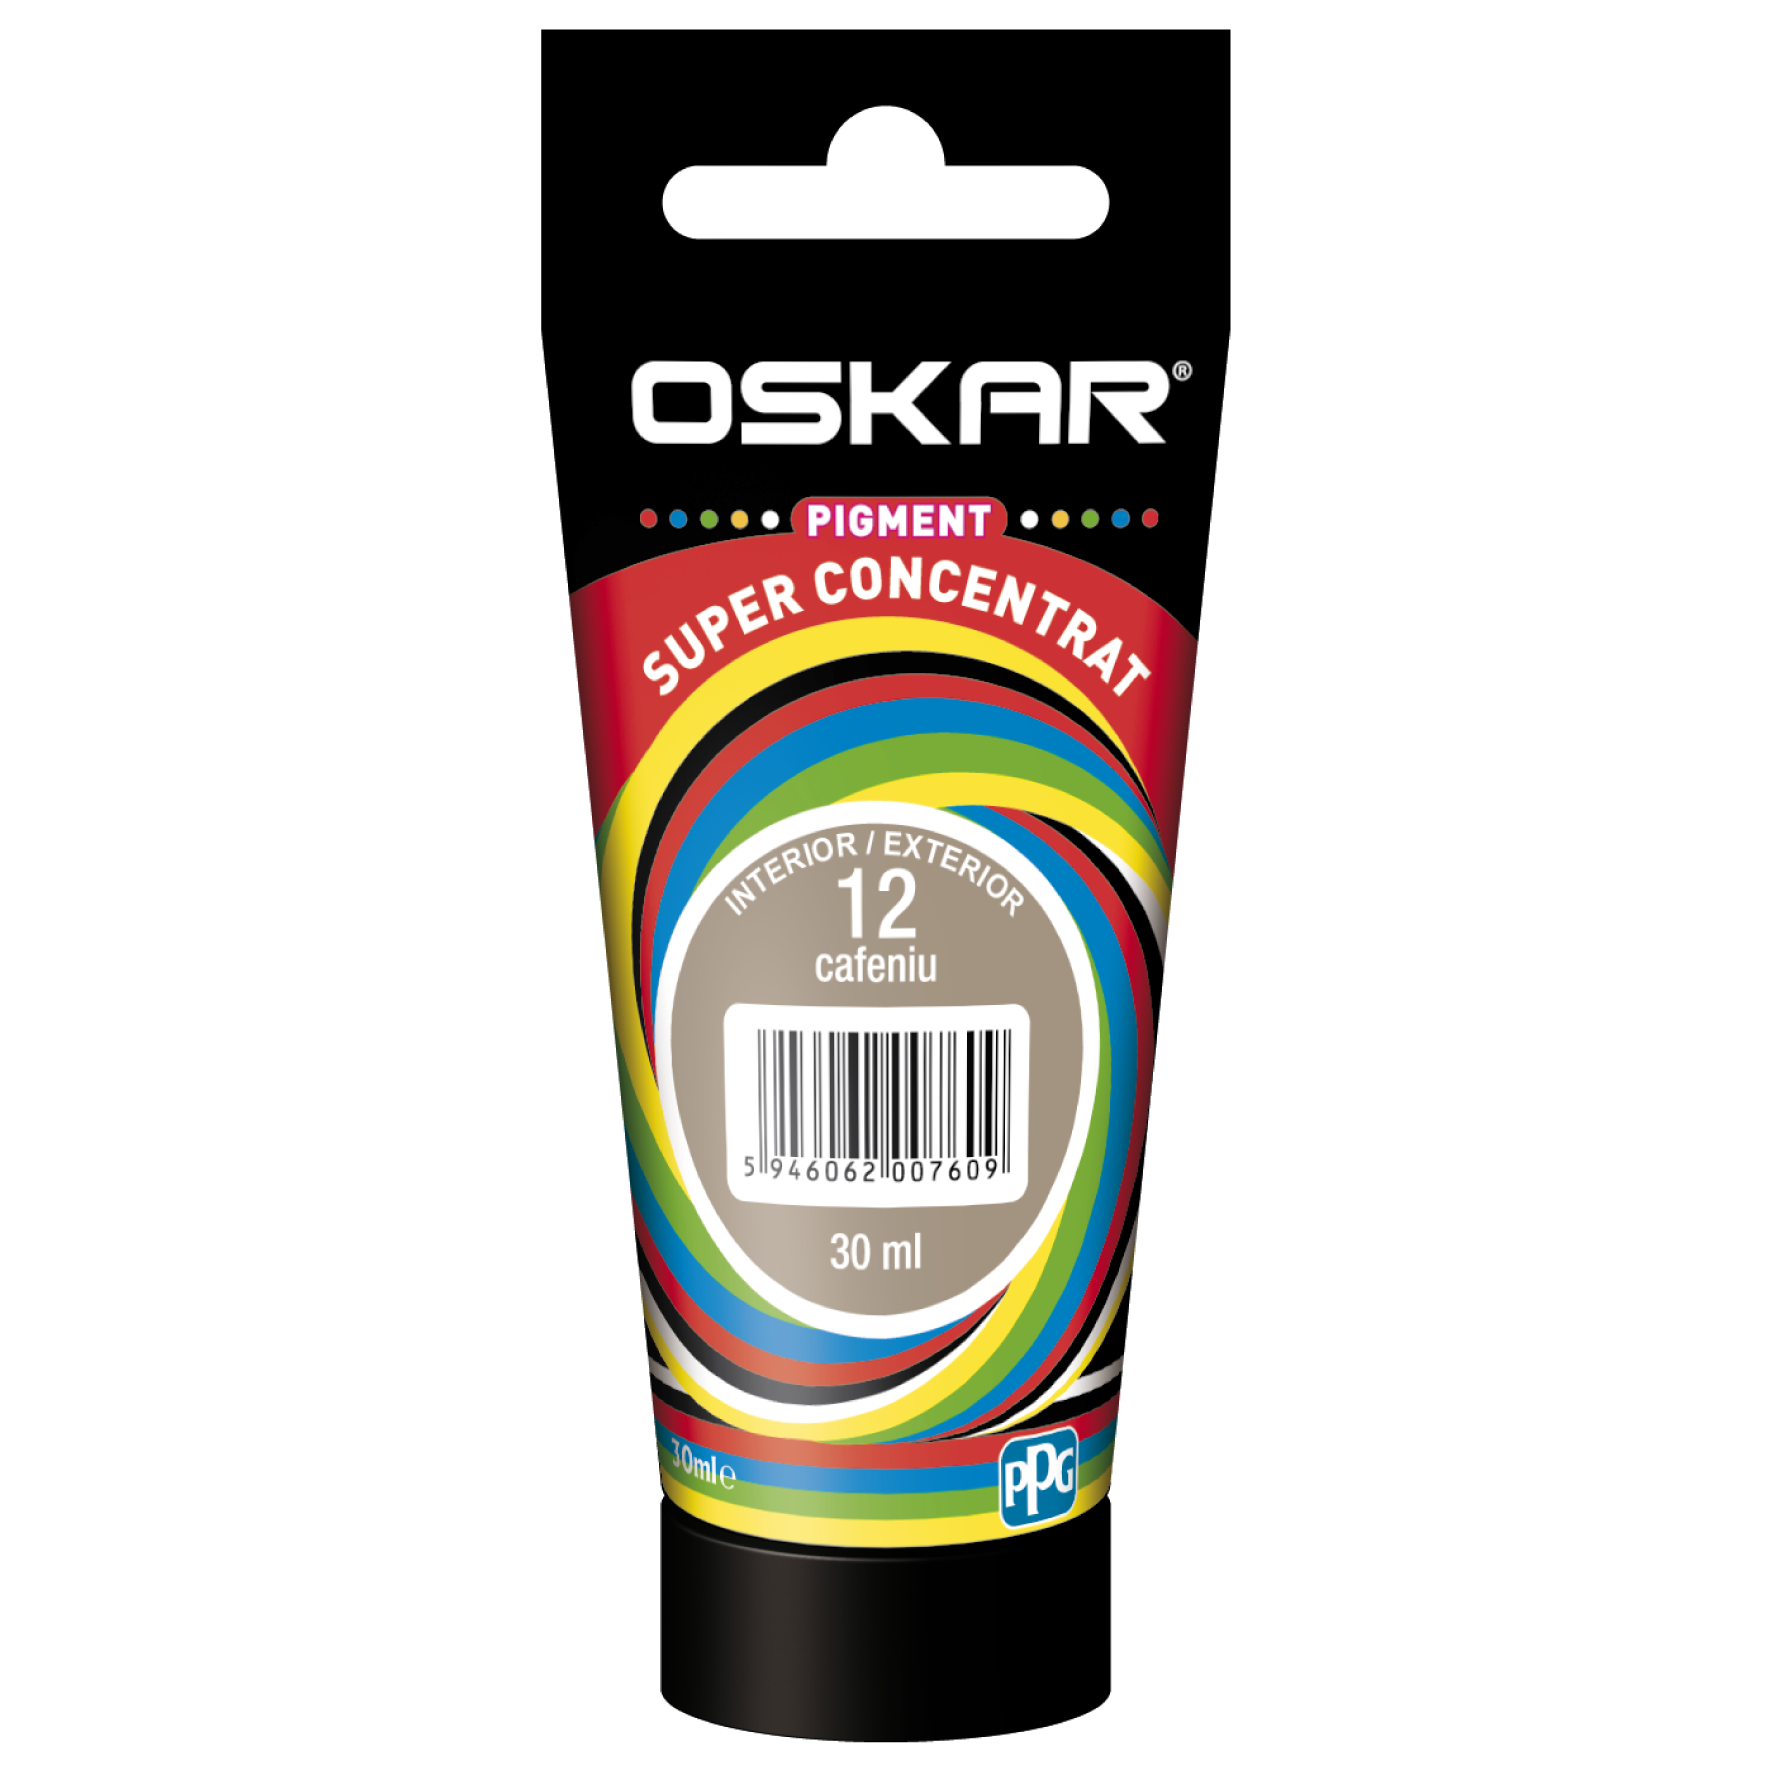 Pigment vopsea lavabila Oskar super concentrat, cafeniu 12, 30 ml (12